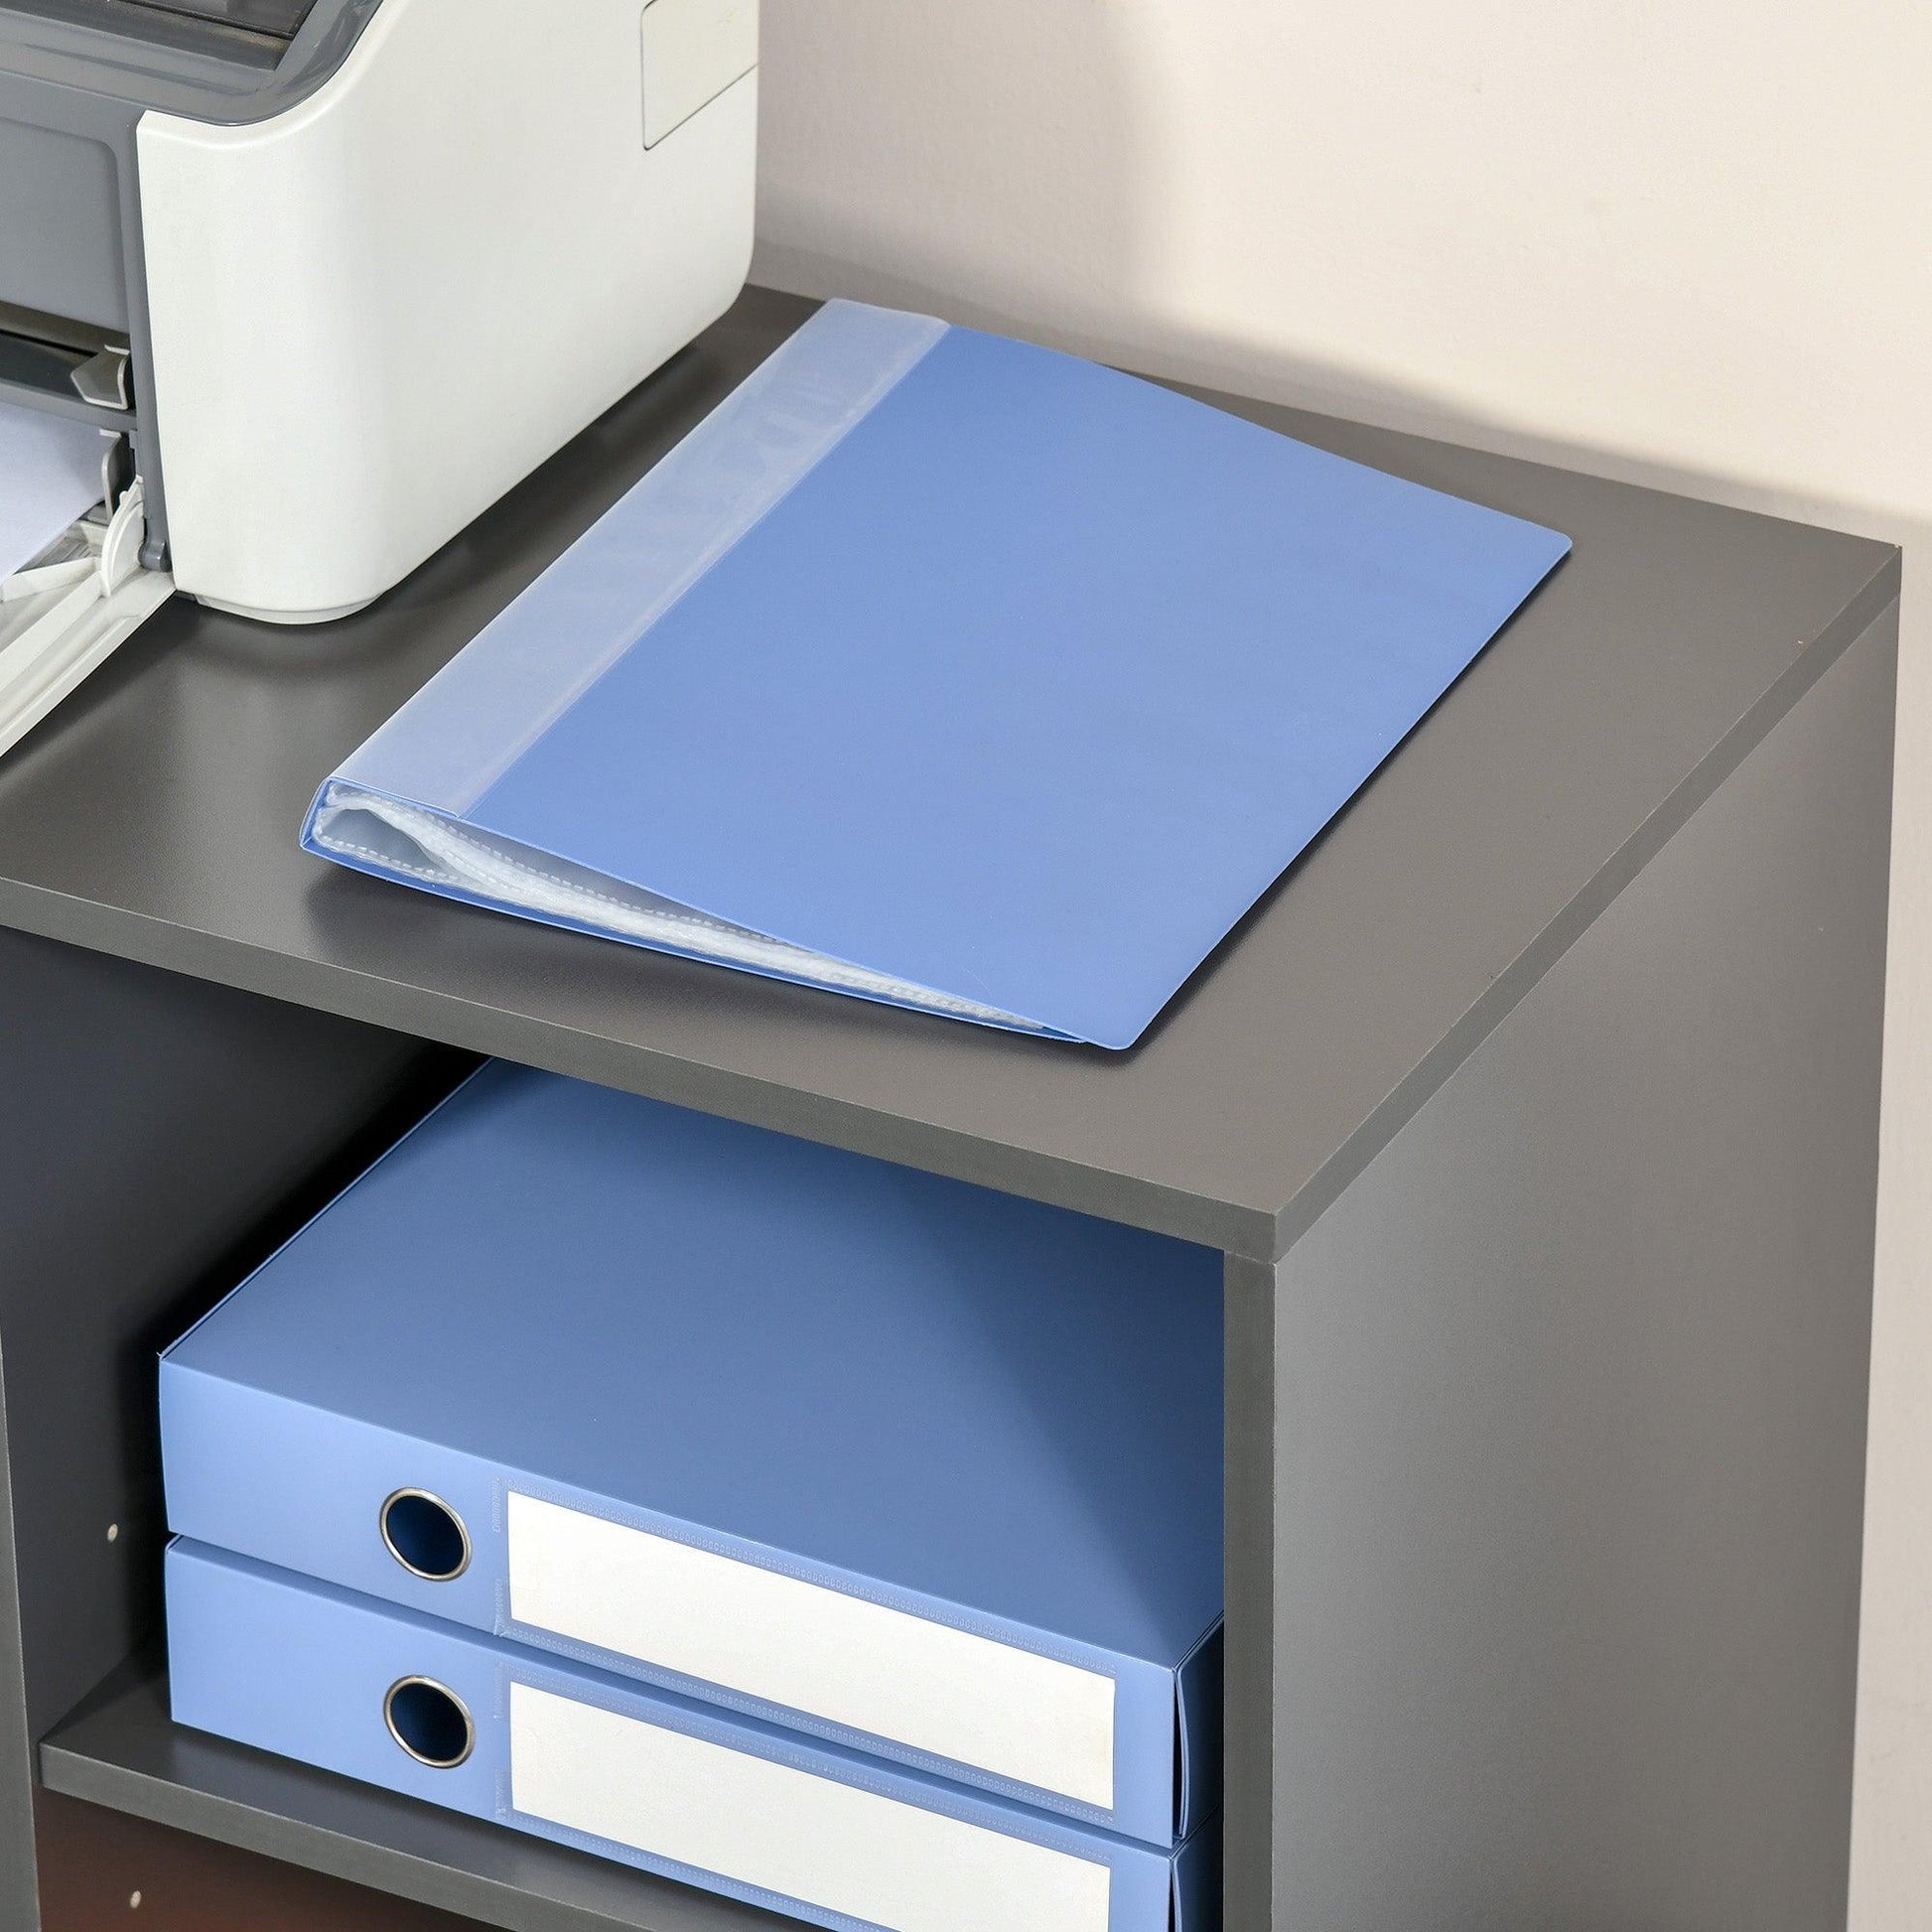 HOMCOM Printer Stand with Storage: Modern 3 Drawers & Shelves - ALL4U RETAILER LTD